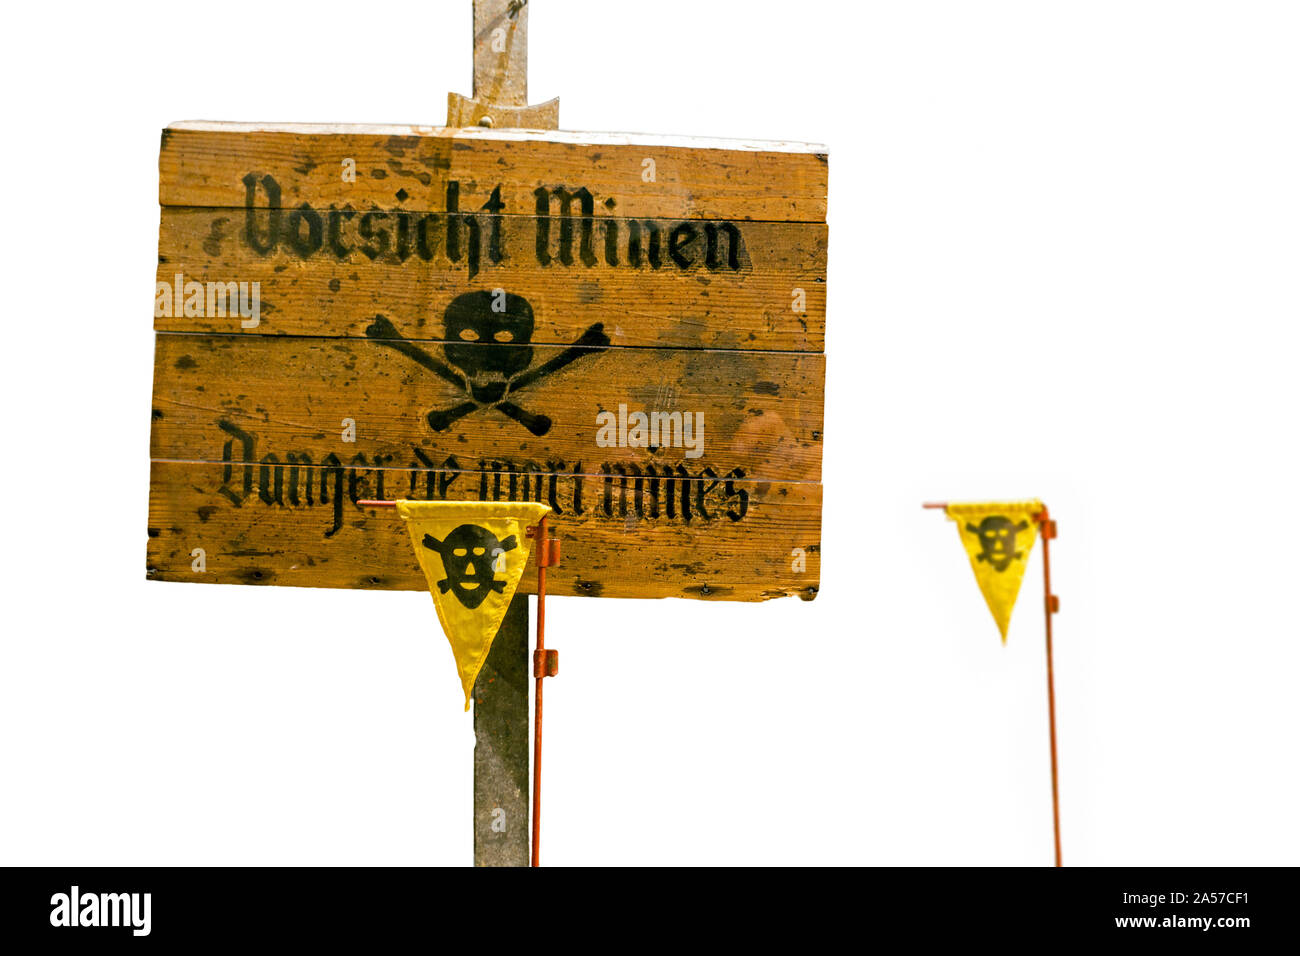 German World War Two wooden Vorsicht Minen / Caution Land Mines warning sign and marker flags marking minefield / minefield against white background Stock Photo